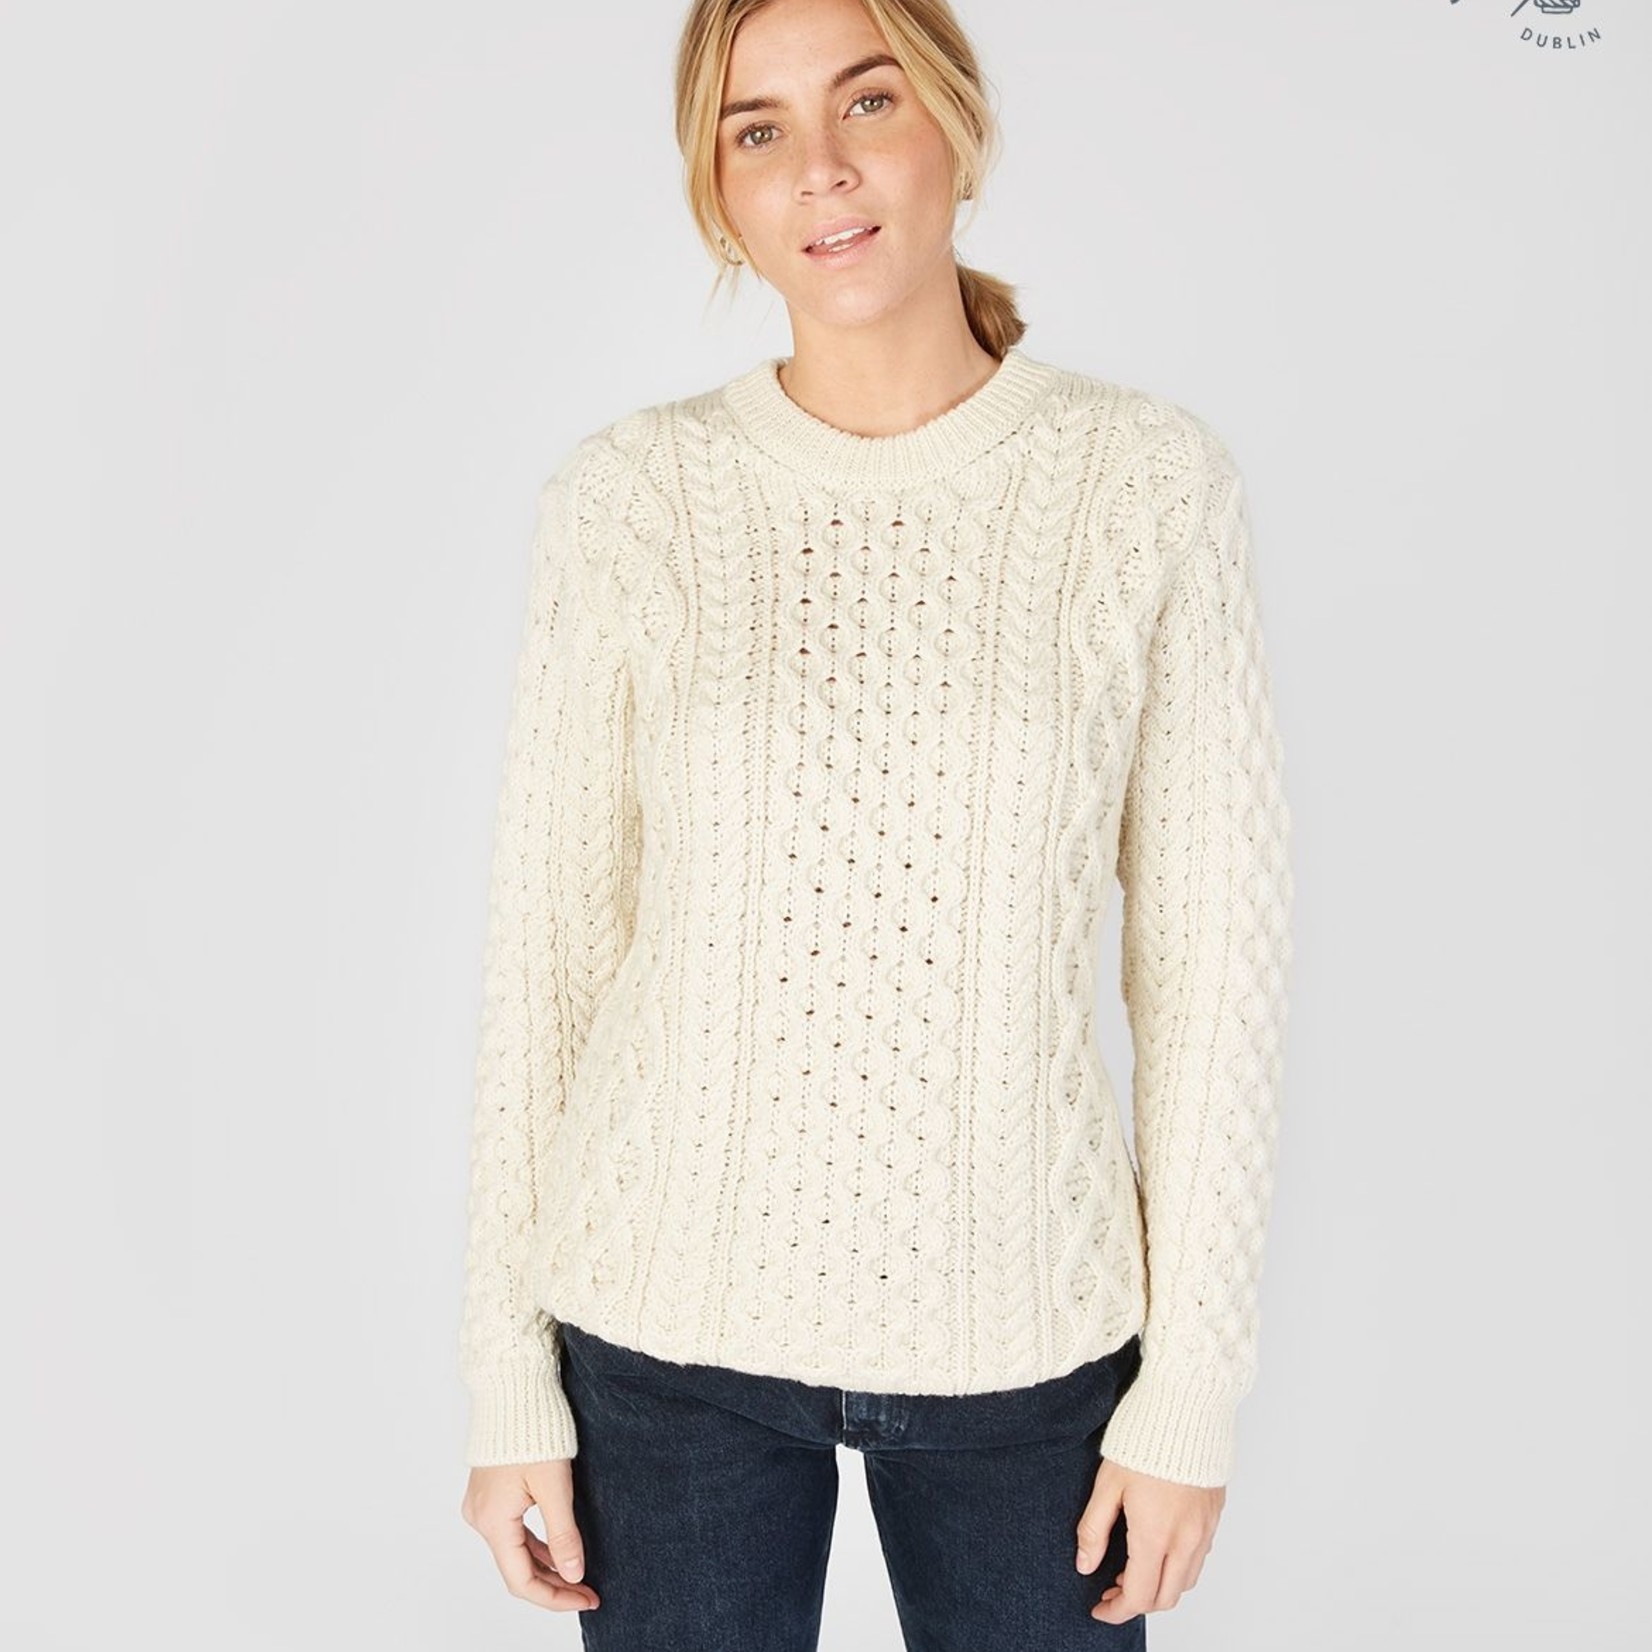 IrelandsEye Knitwear Unisex Honeycomb Stitch Sweater *Multiple Colors*